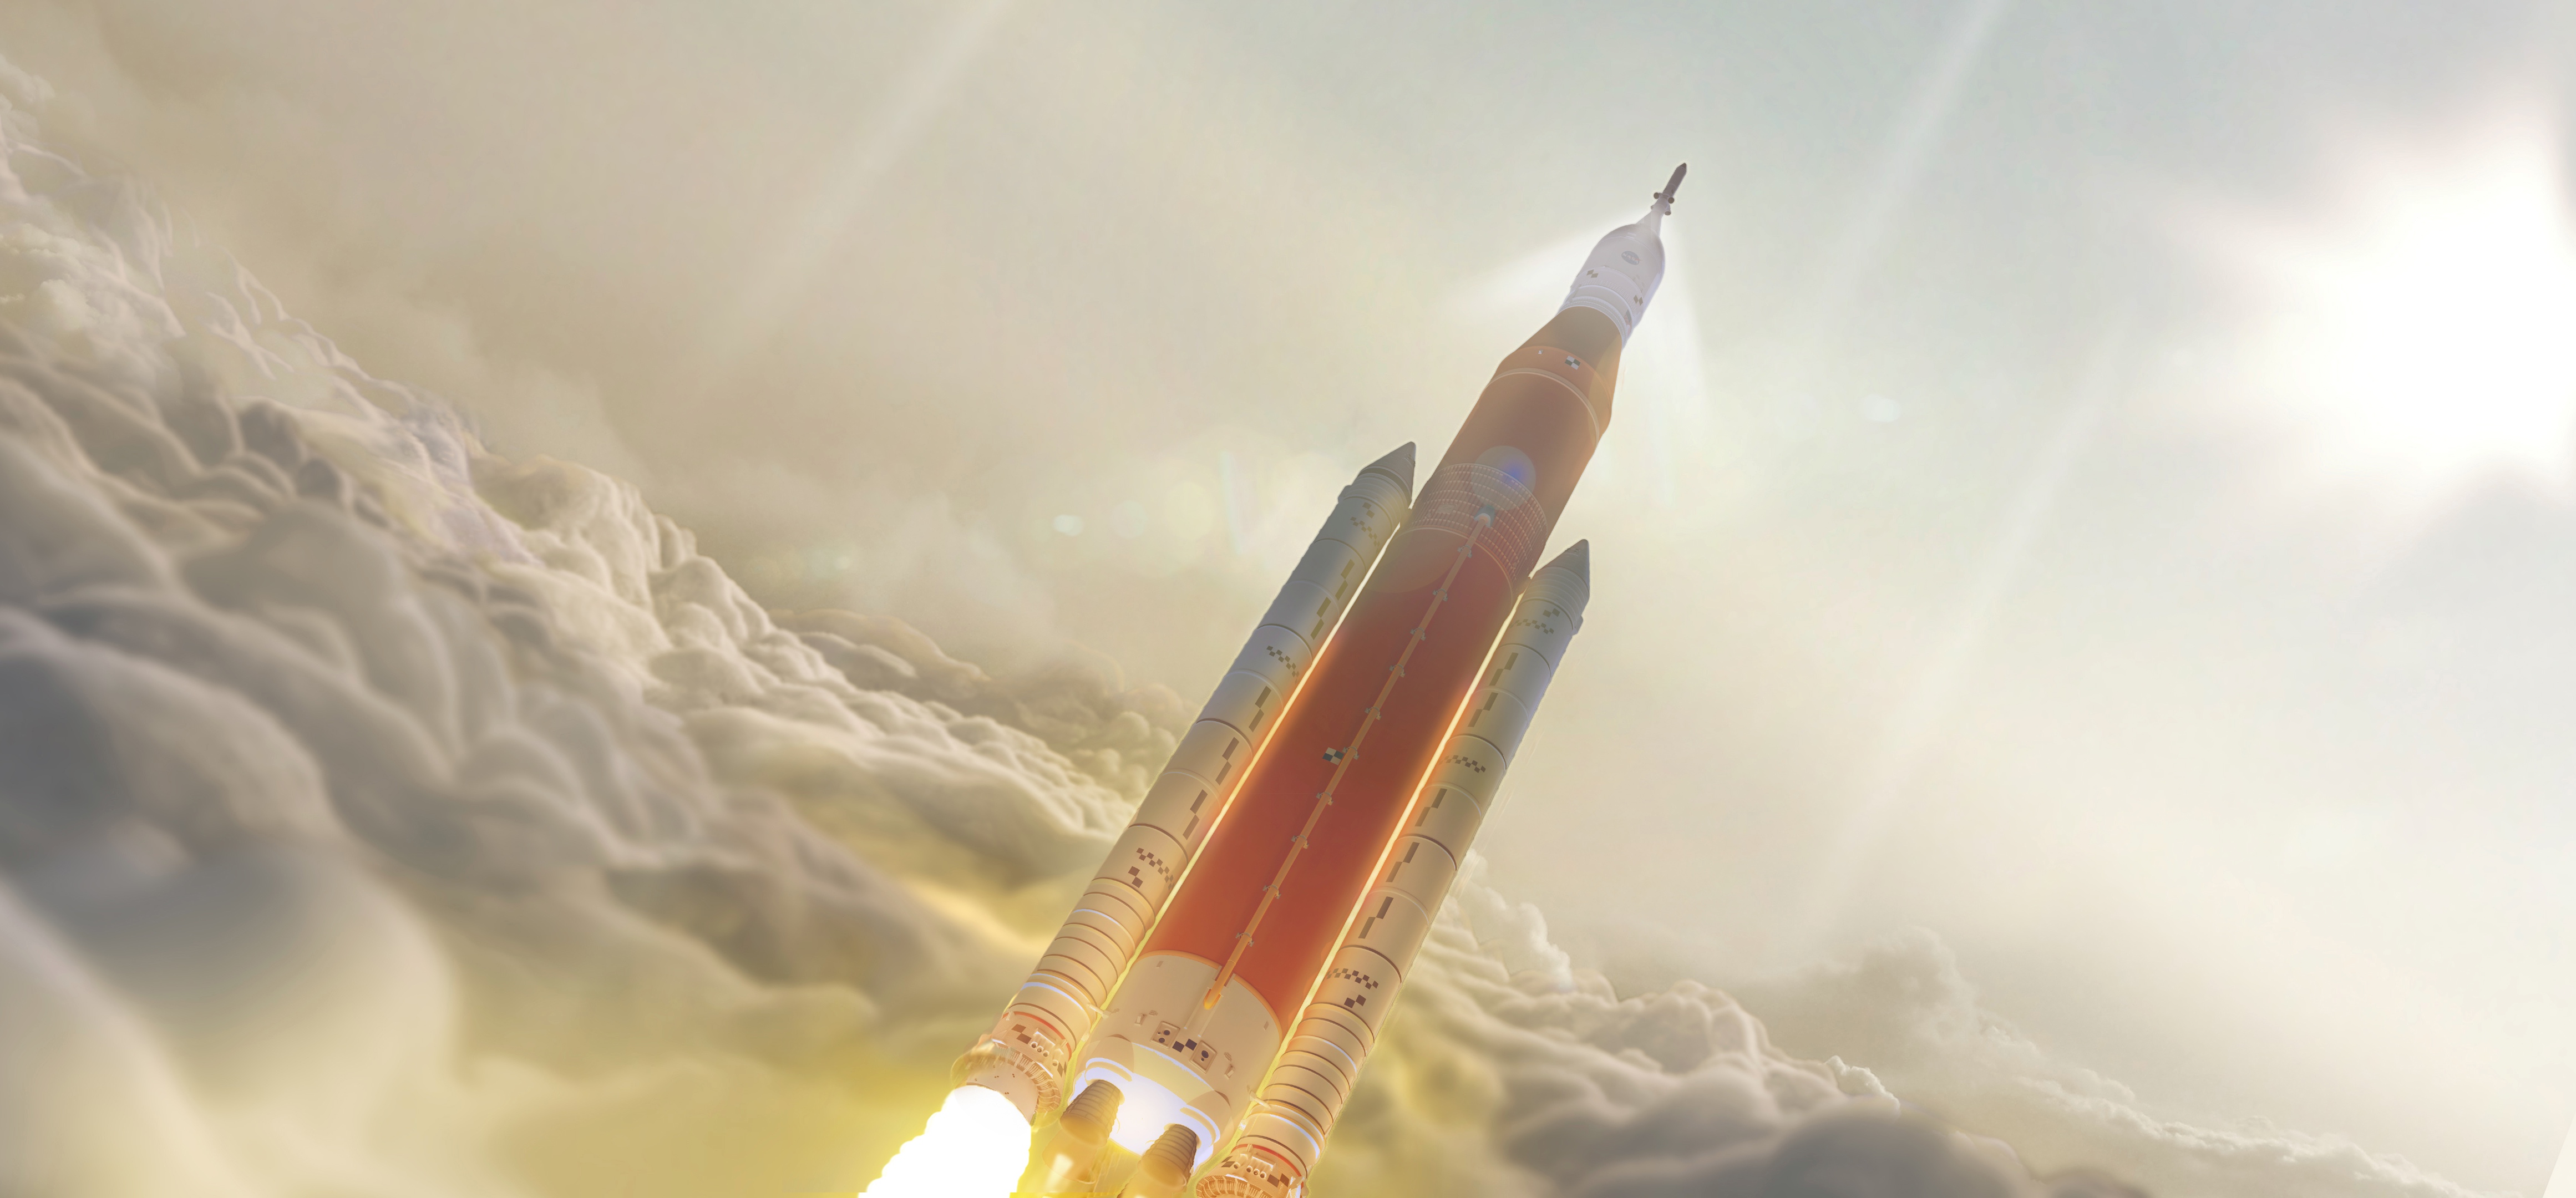 SLS, le lanceur lourd de la Nasa, volant vers l'espace . © Nasa